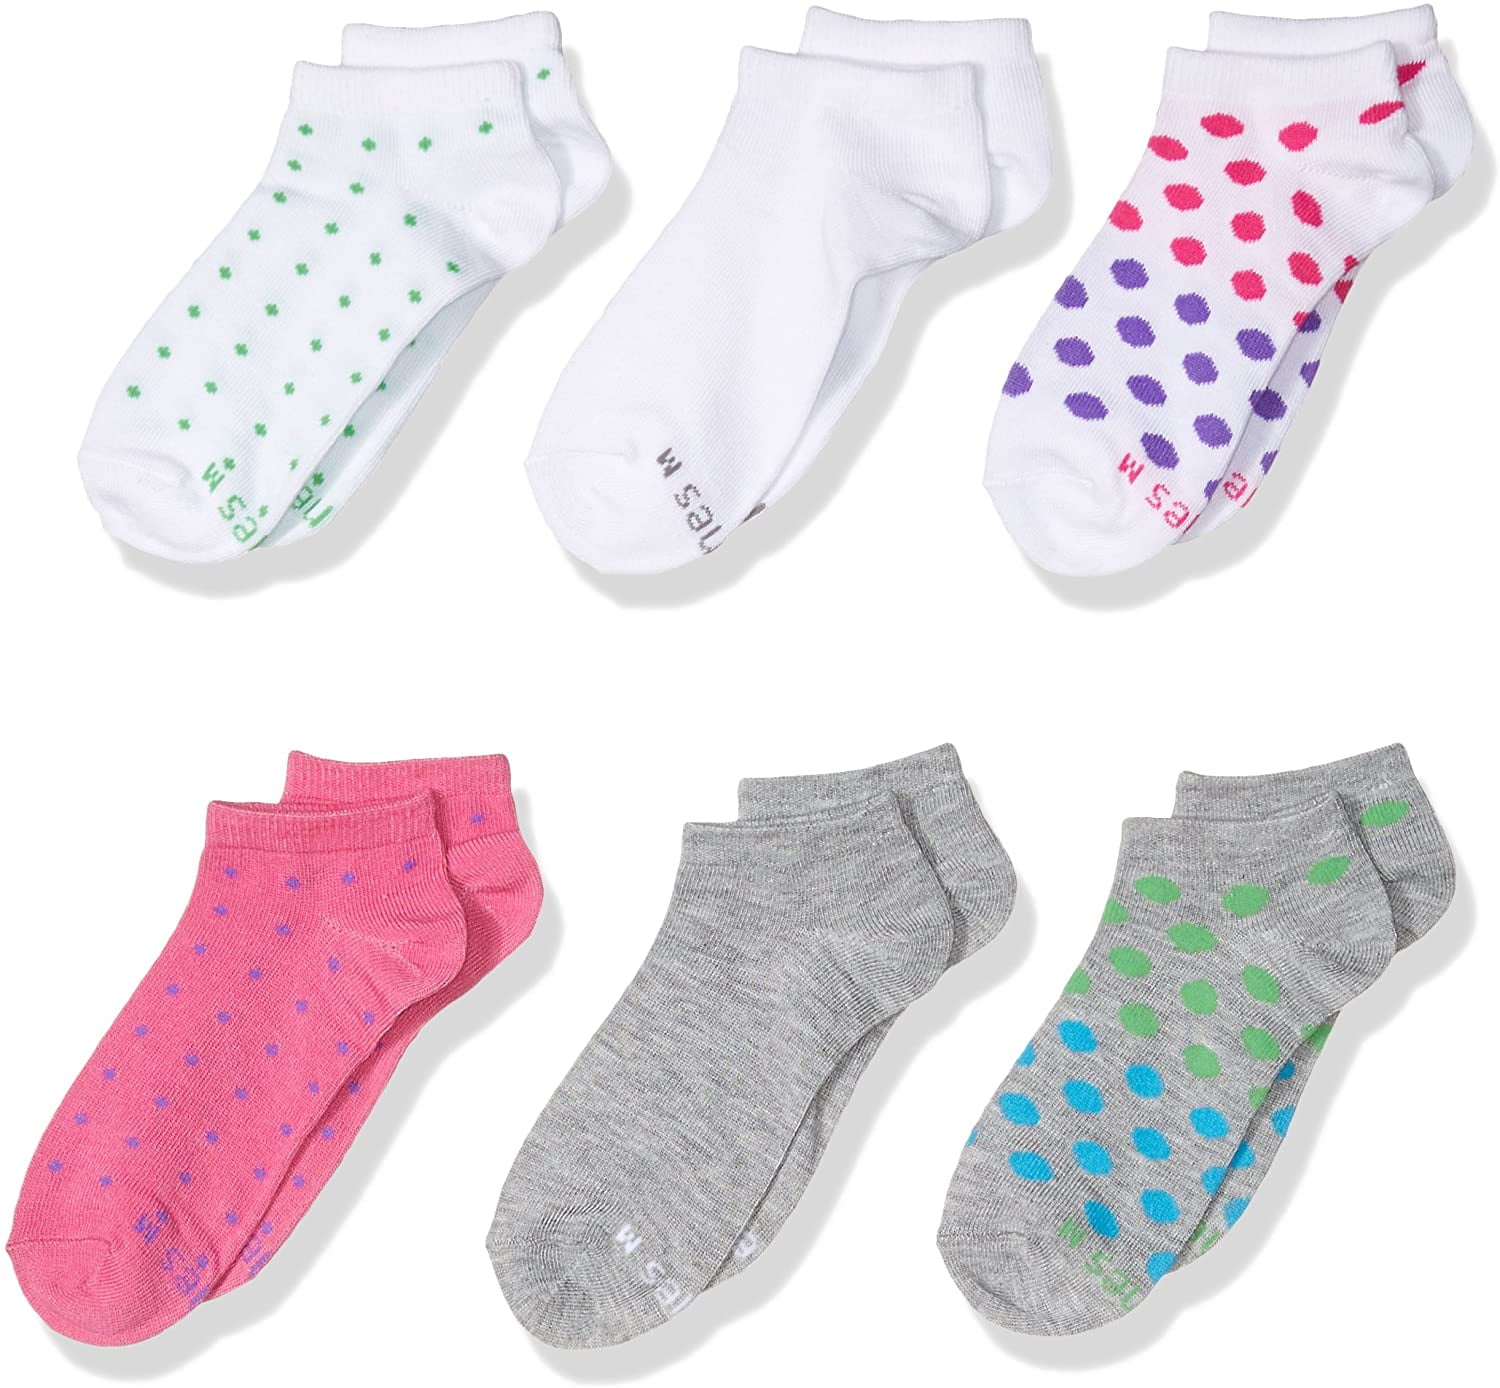 Hanes Girls' No Show Premium Comfort Blend Socks 6 Pair, Small 6-10.5 ...